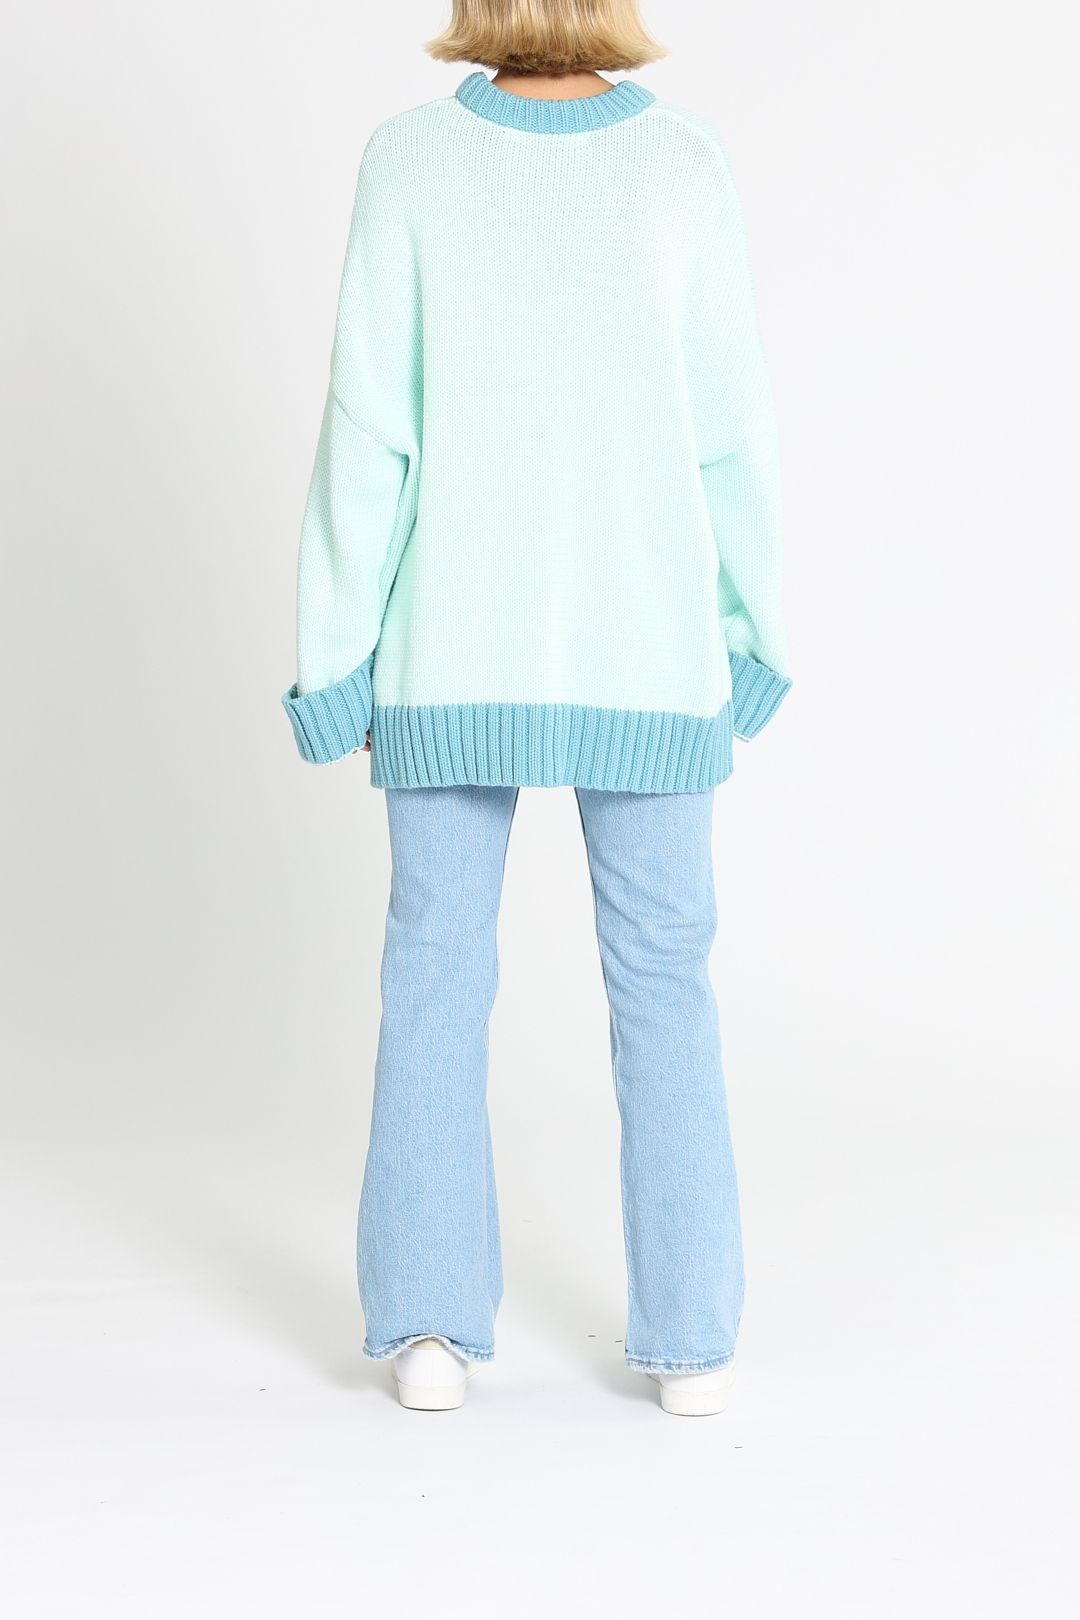 Blanca Chambord Knit Blue Colourblock